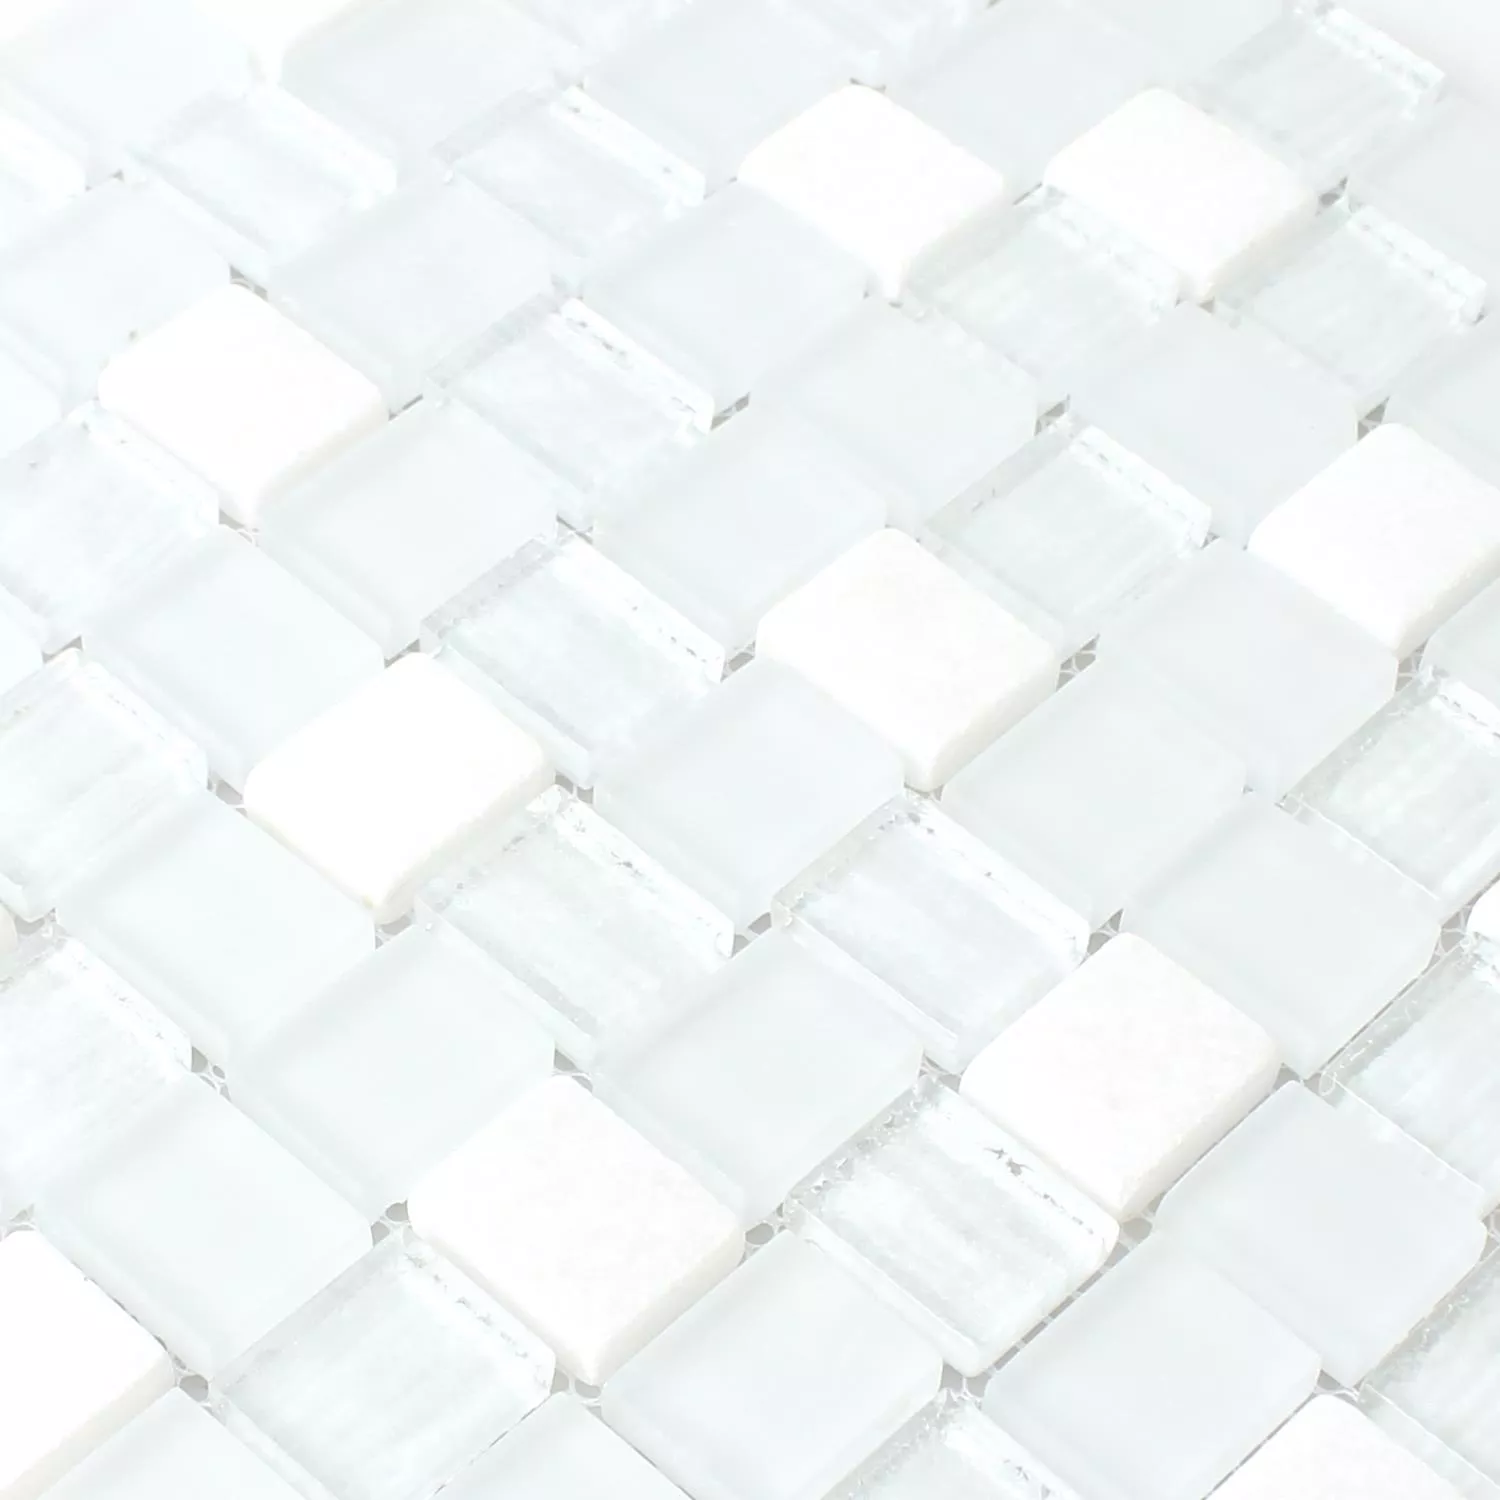 Sample Mosaic Tiles Glass Natural Stone White